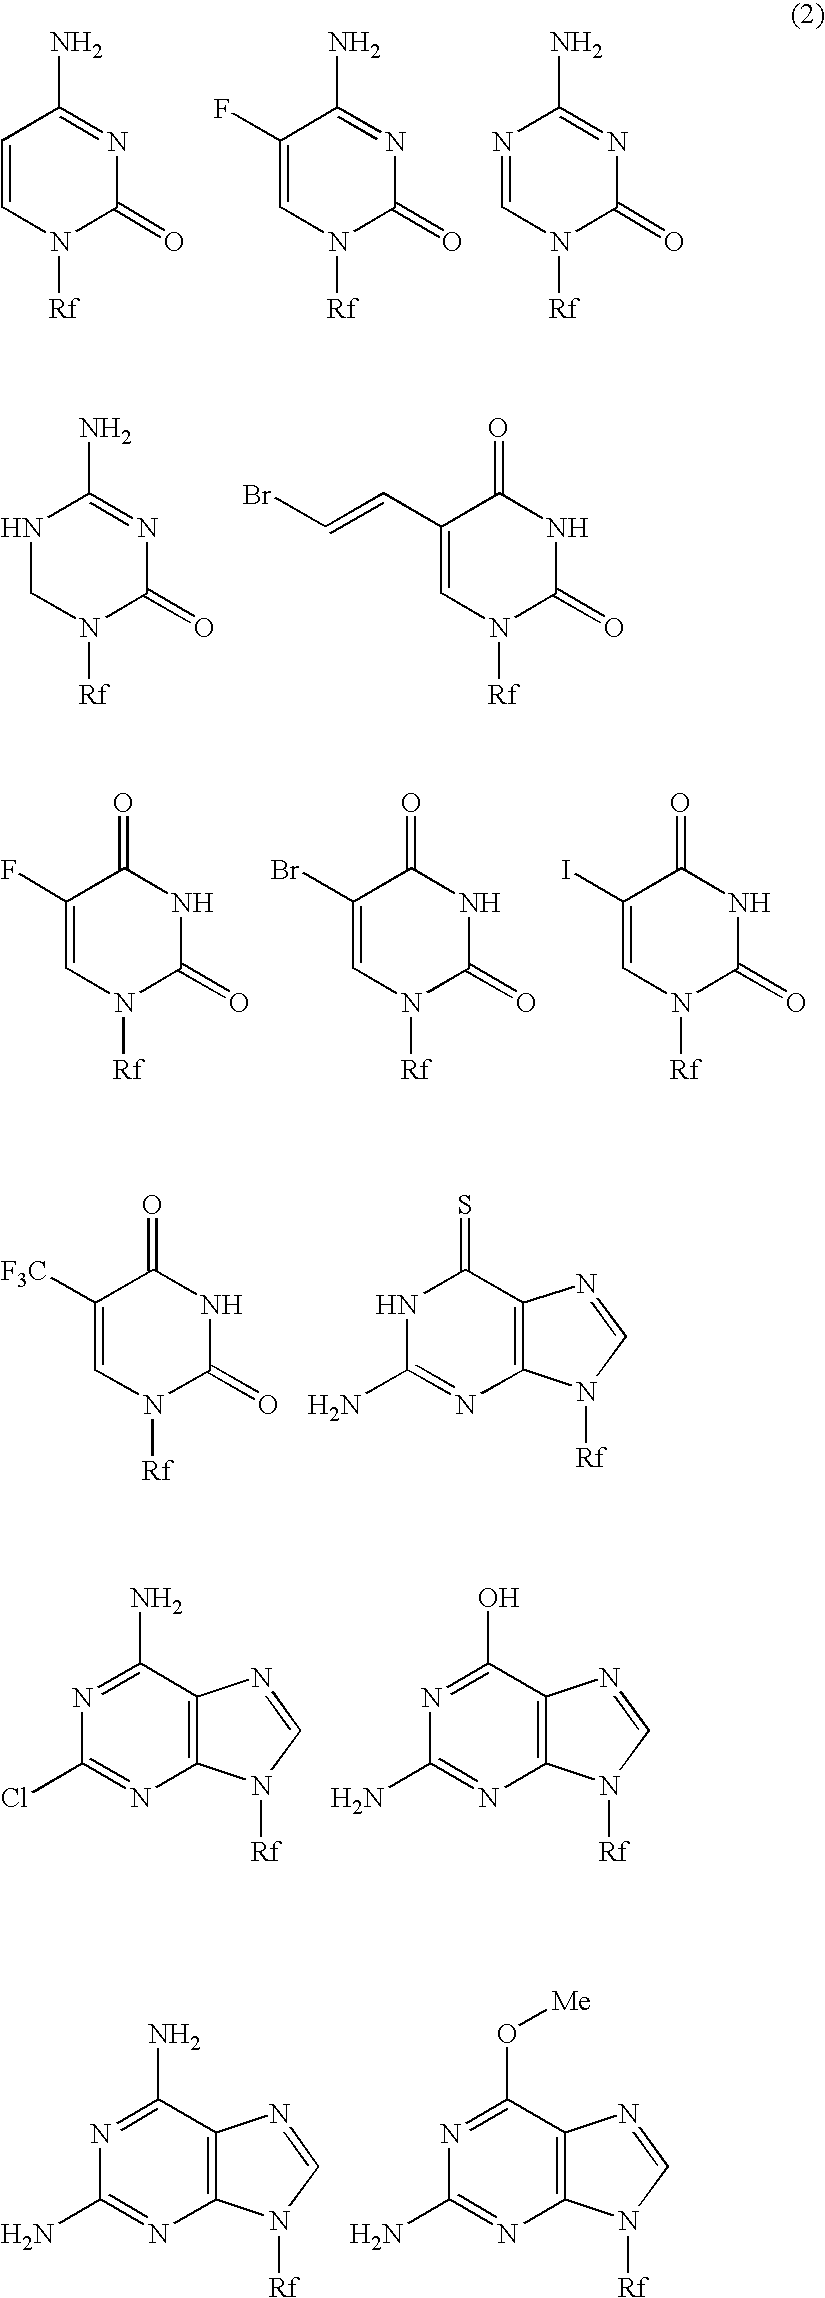 High-molecular weight derivative of nucleic acid antimetabolite